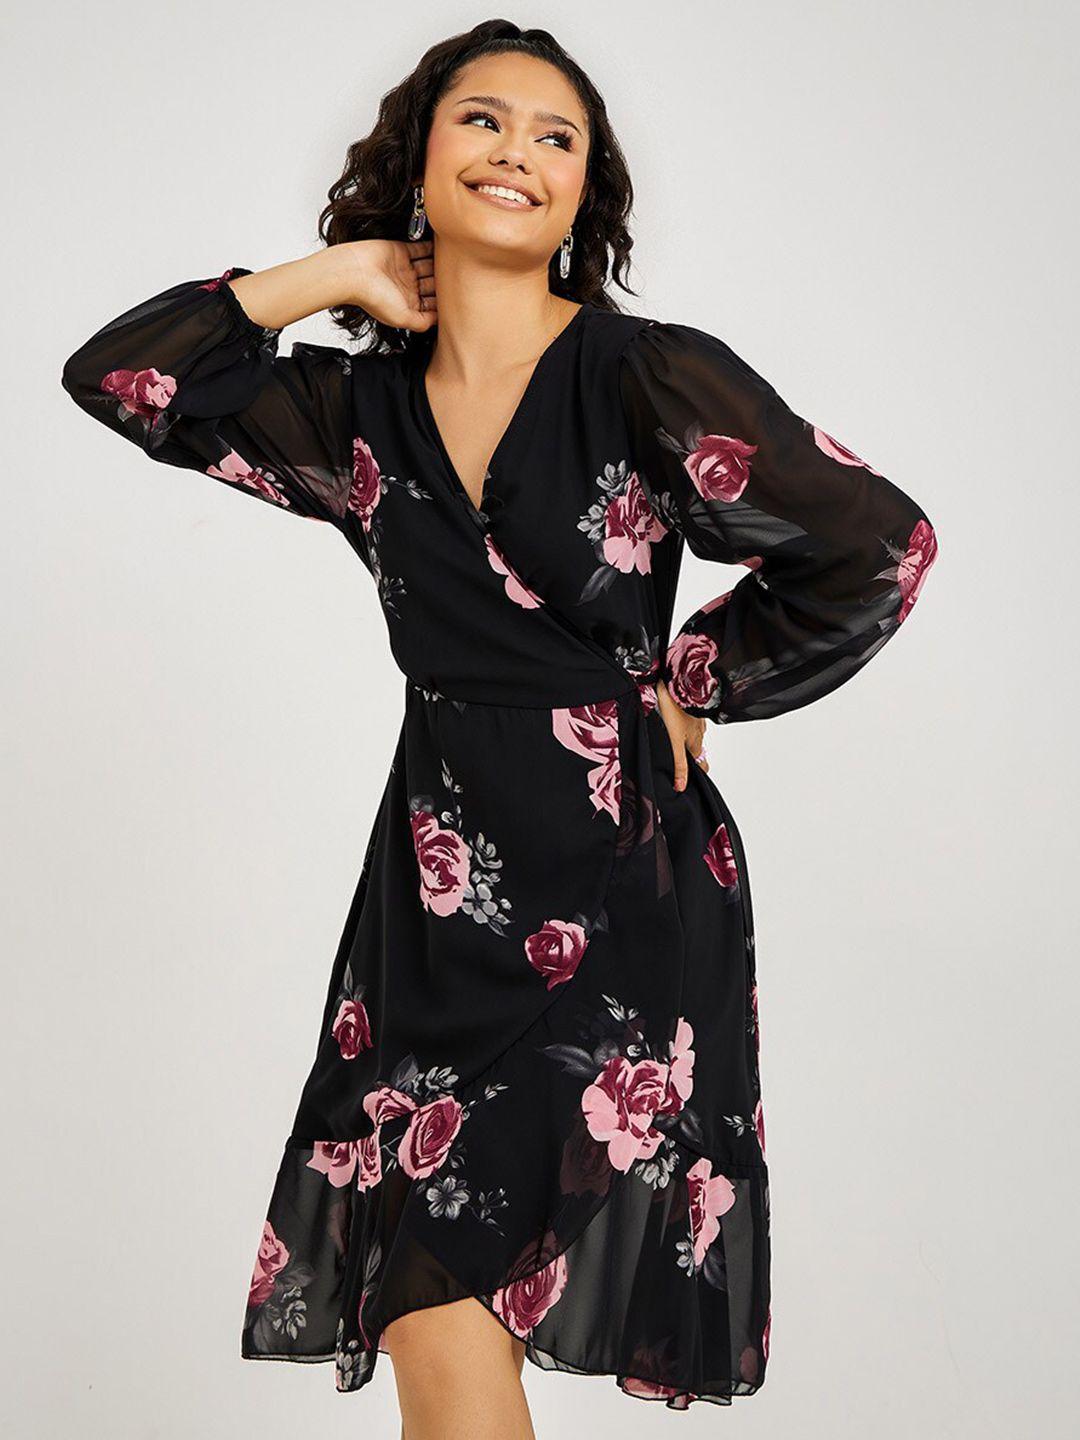 styli black & pink floral dress